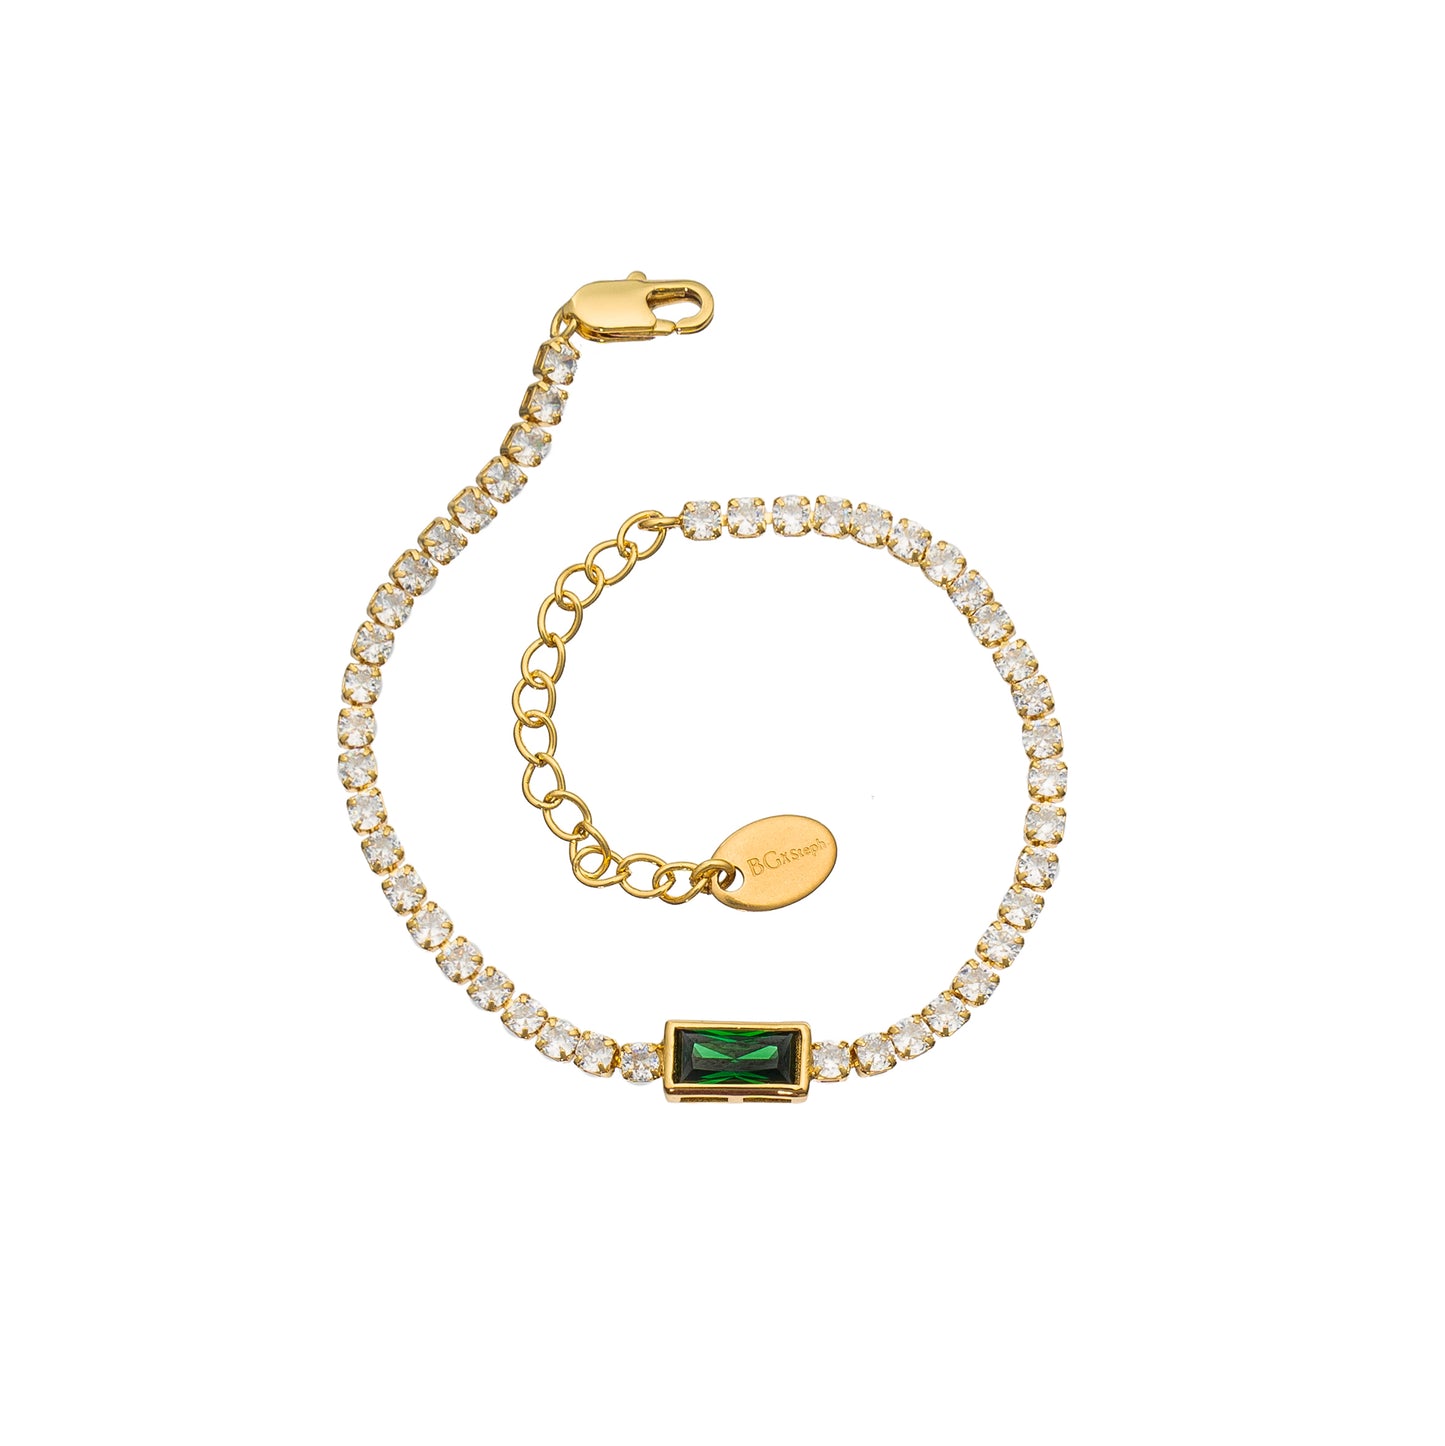 Emerald Look Bundle - 2 items -Best Price